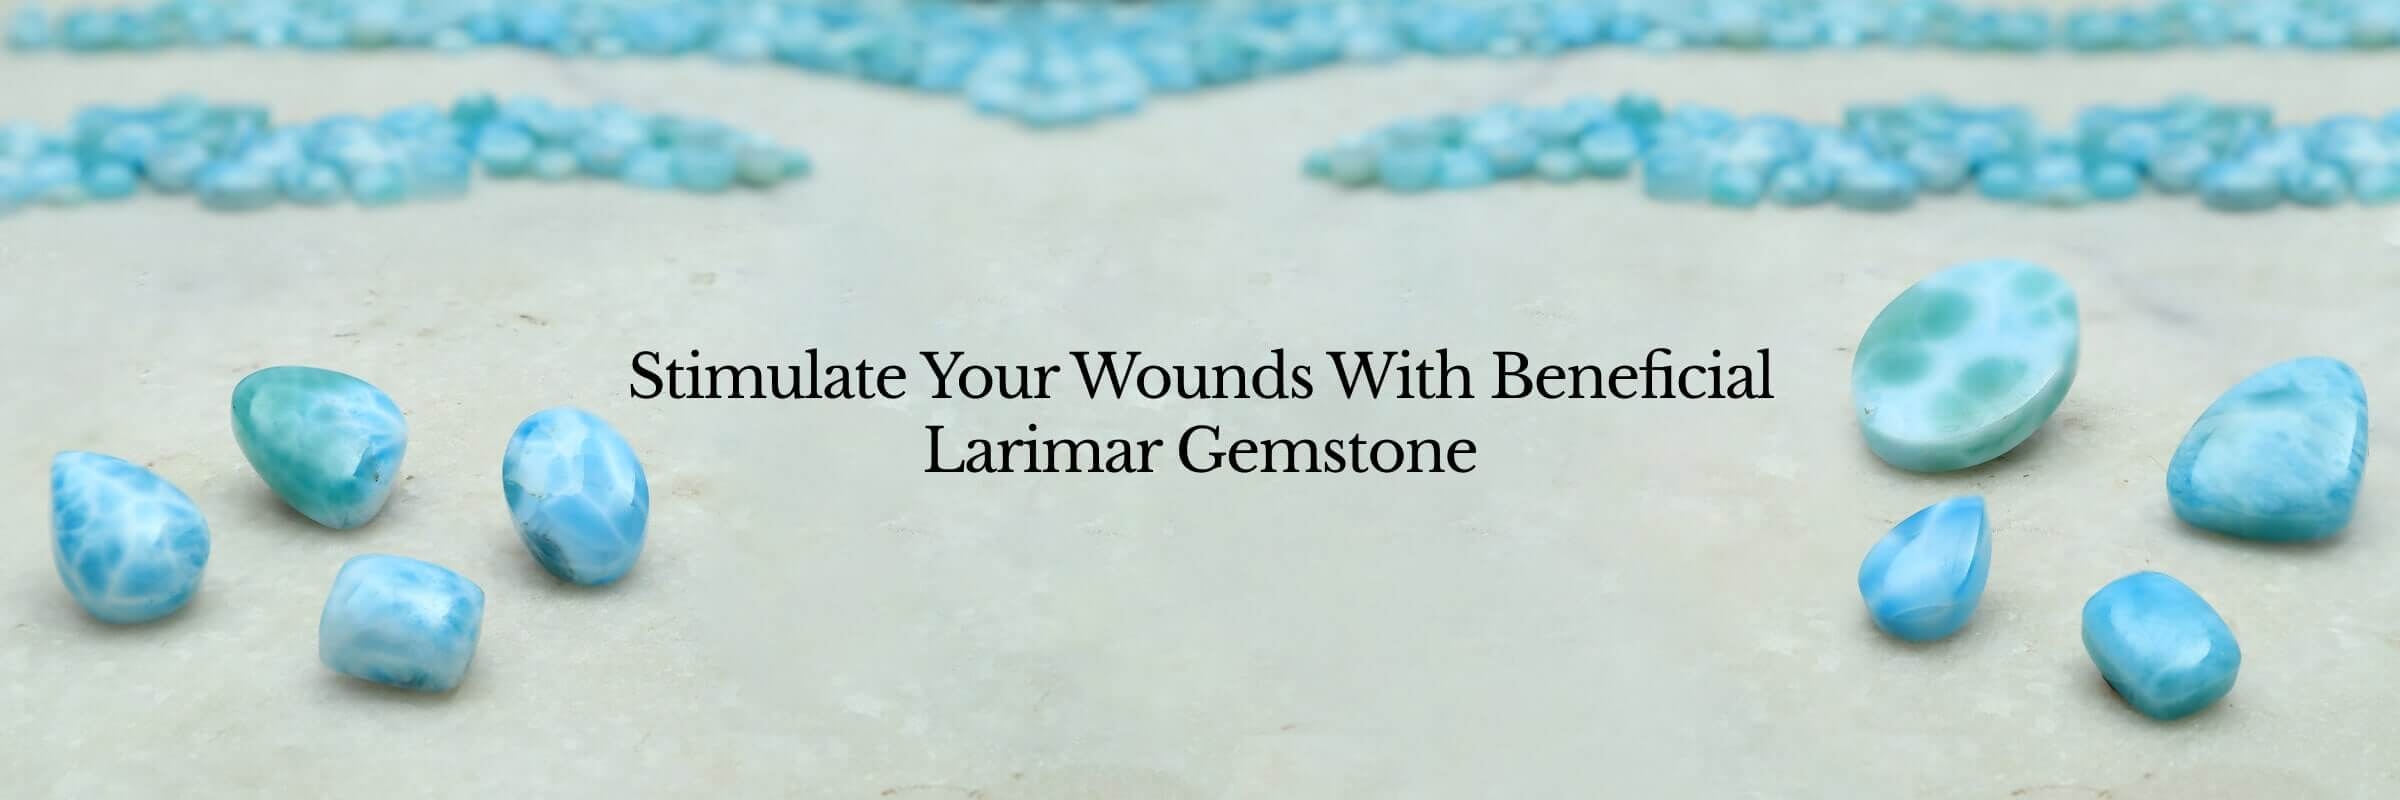 Healing Properties of Larimar Gemstone